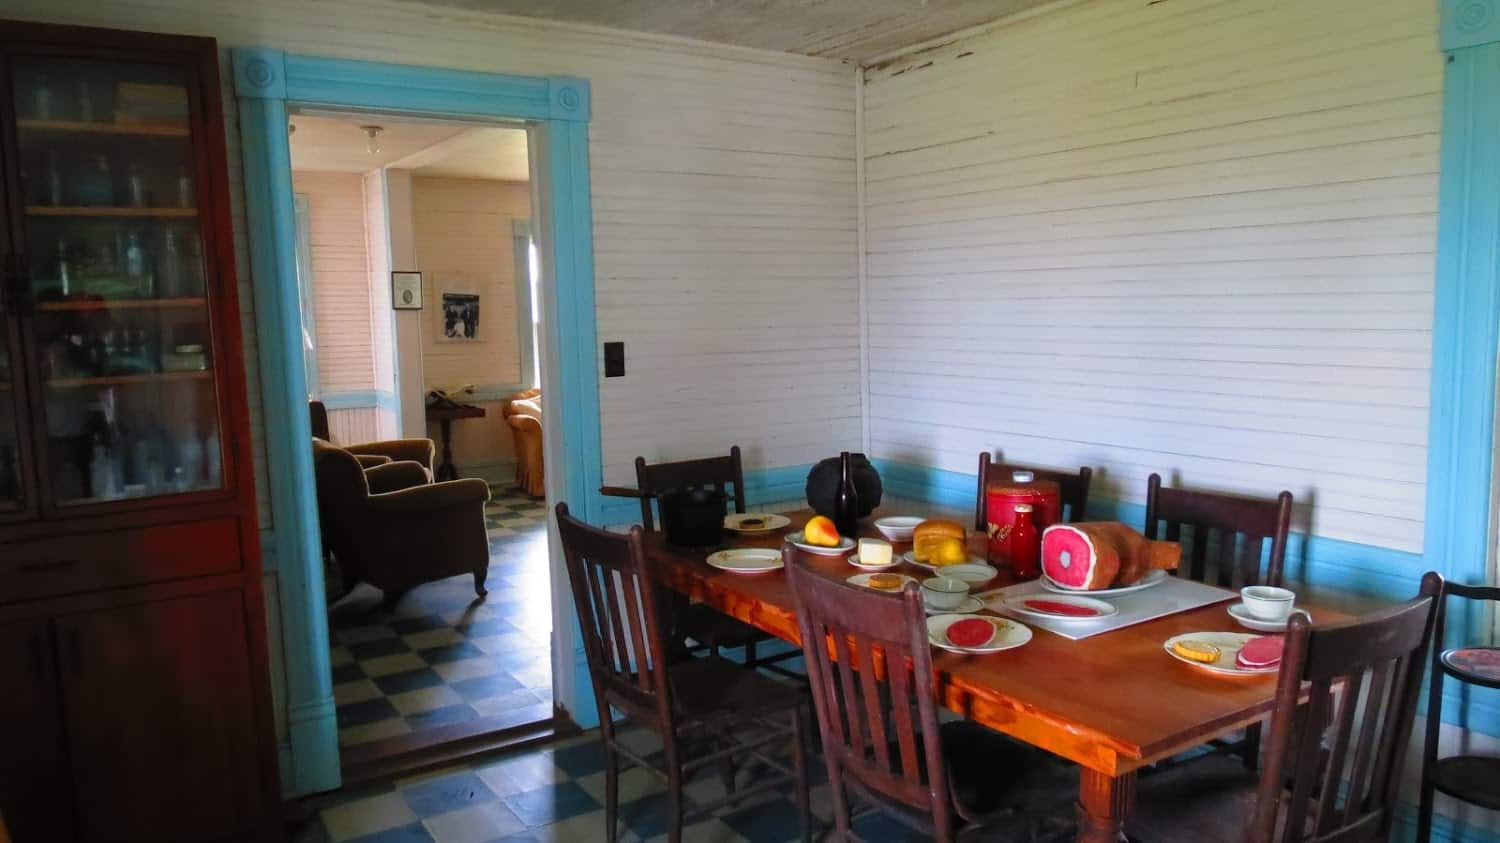 The Old Midgett residence at Chicamacomico Lifesaving Station